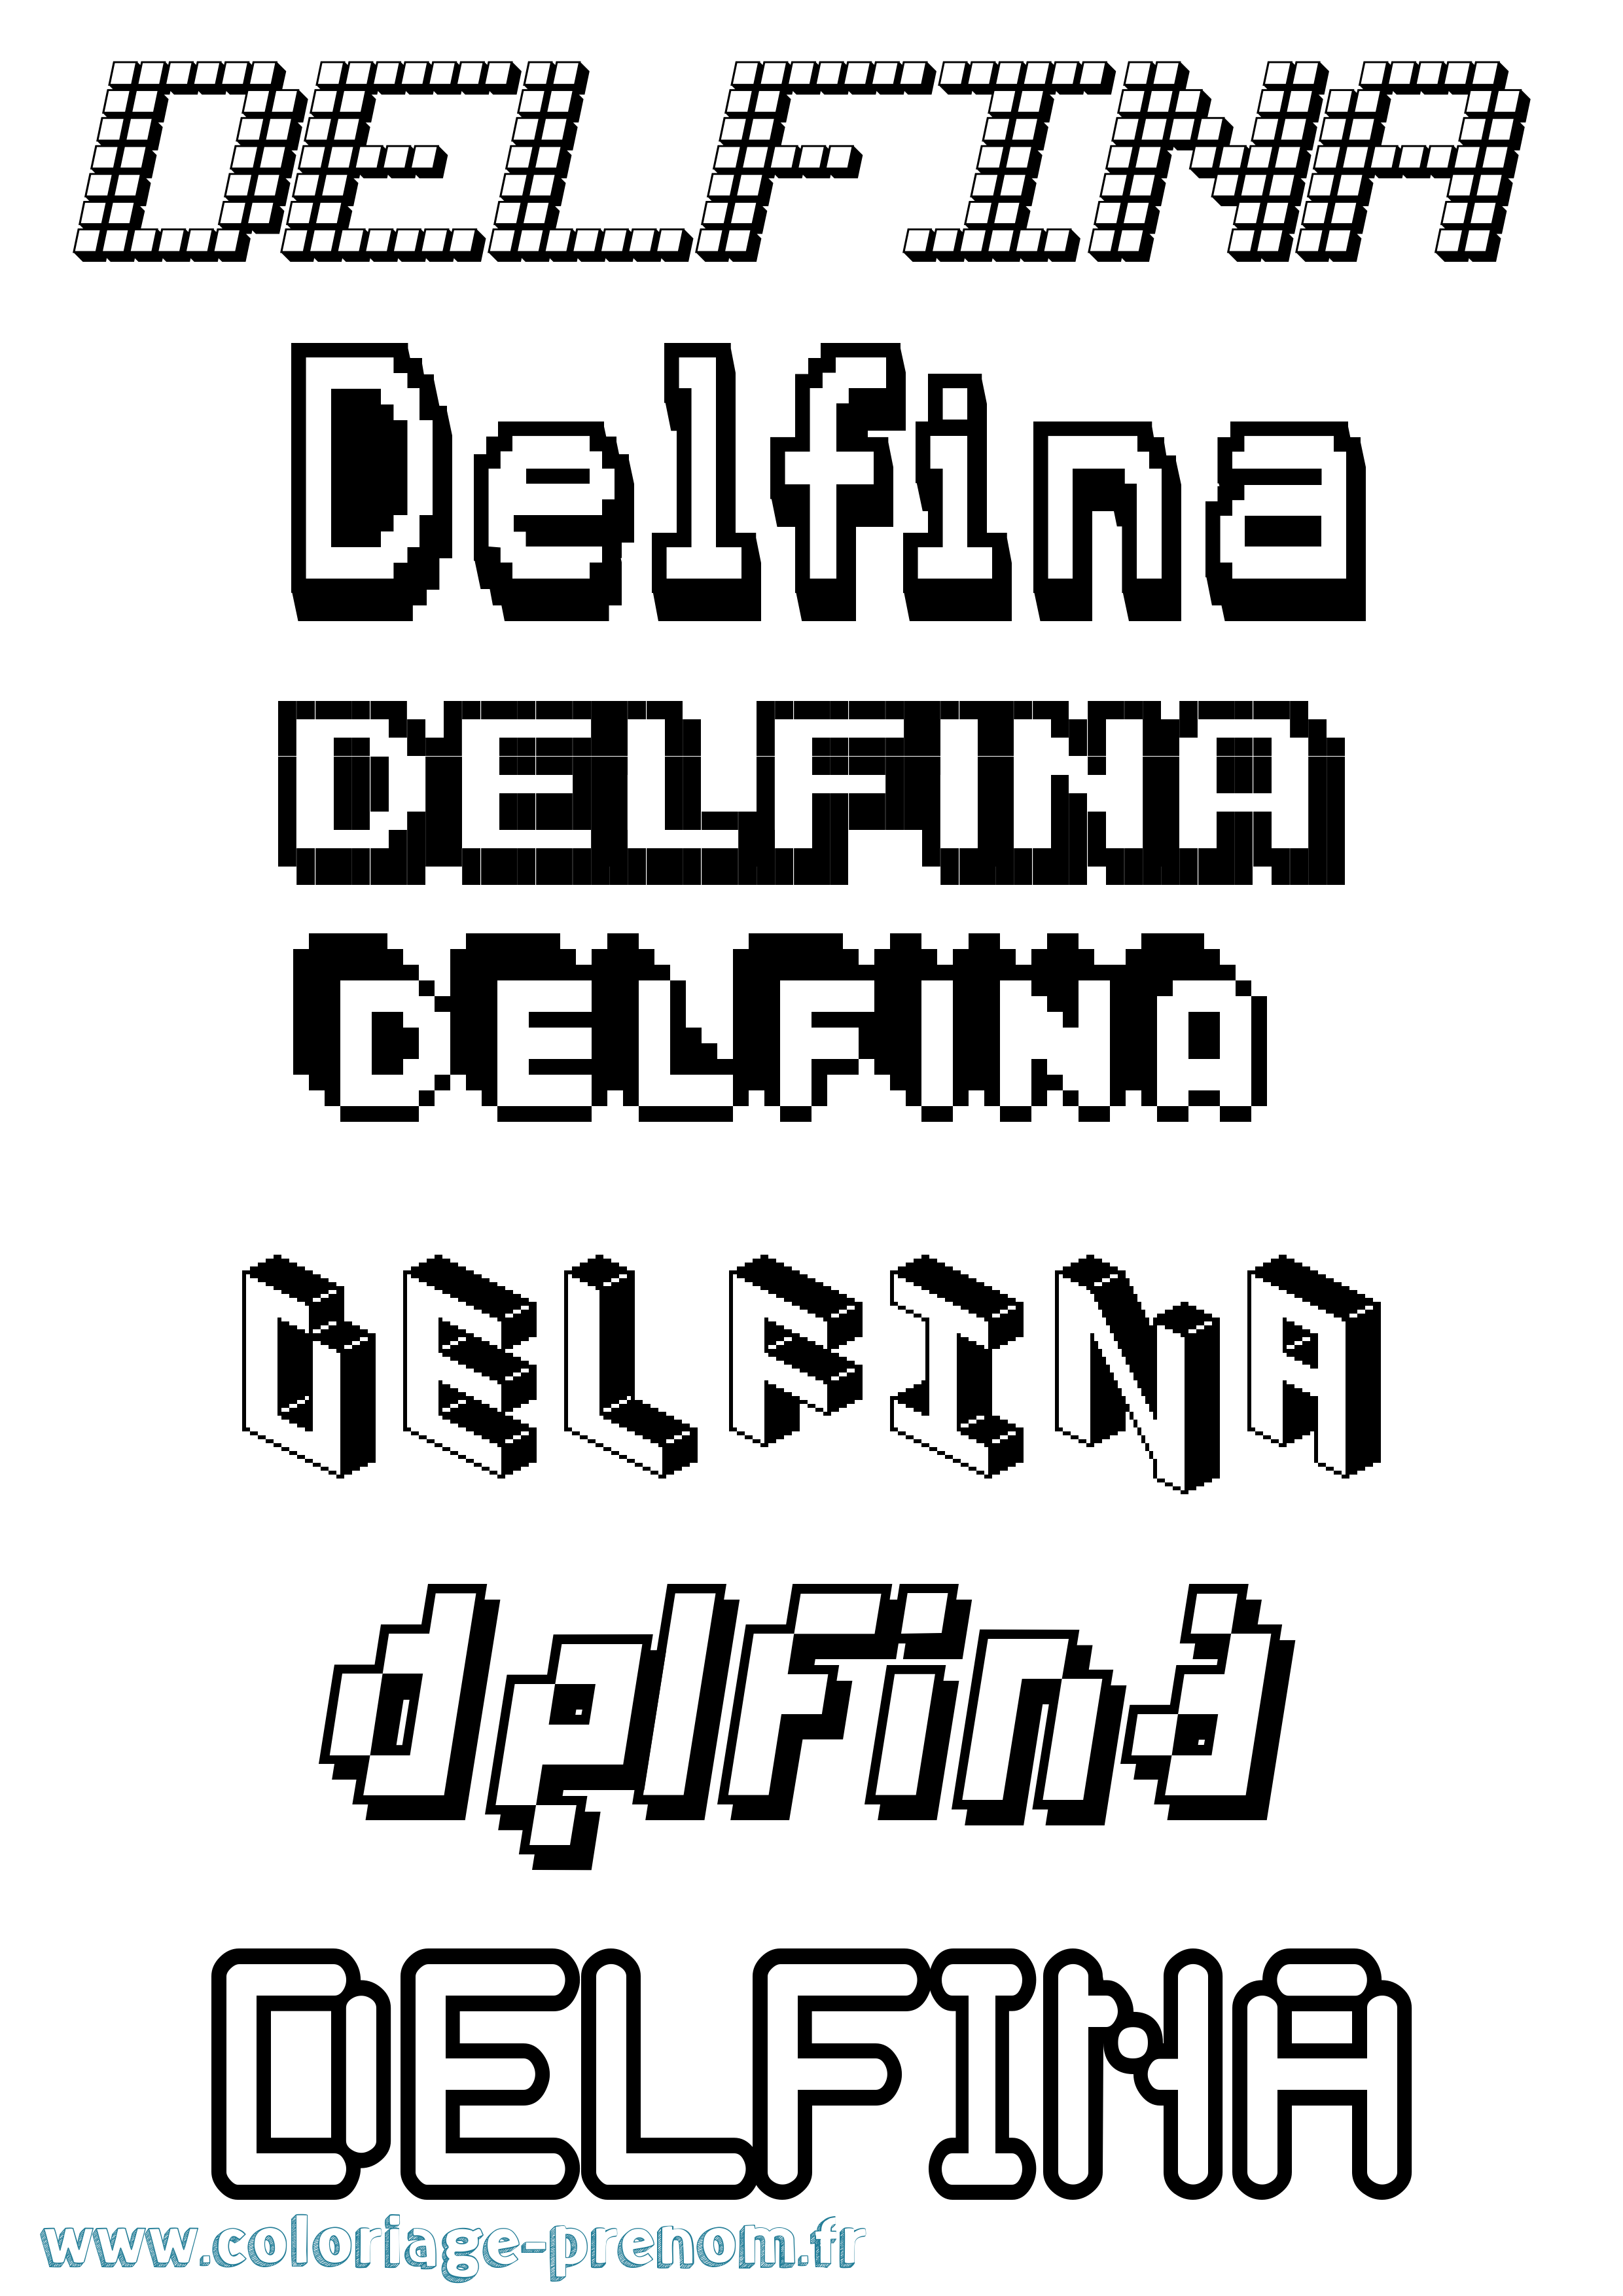 Coloriage prénom Delfina Pixel